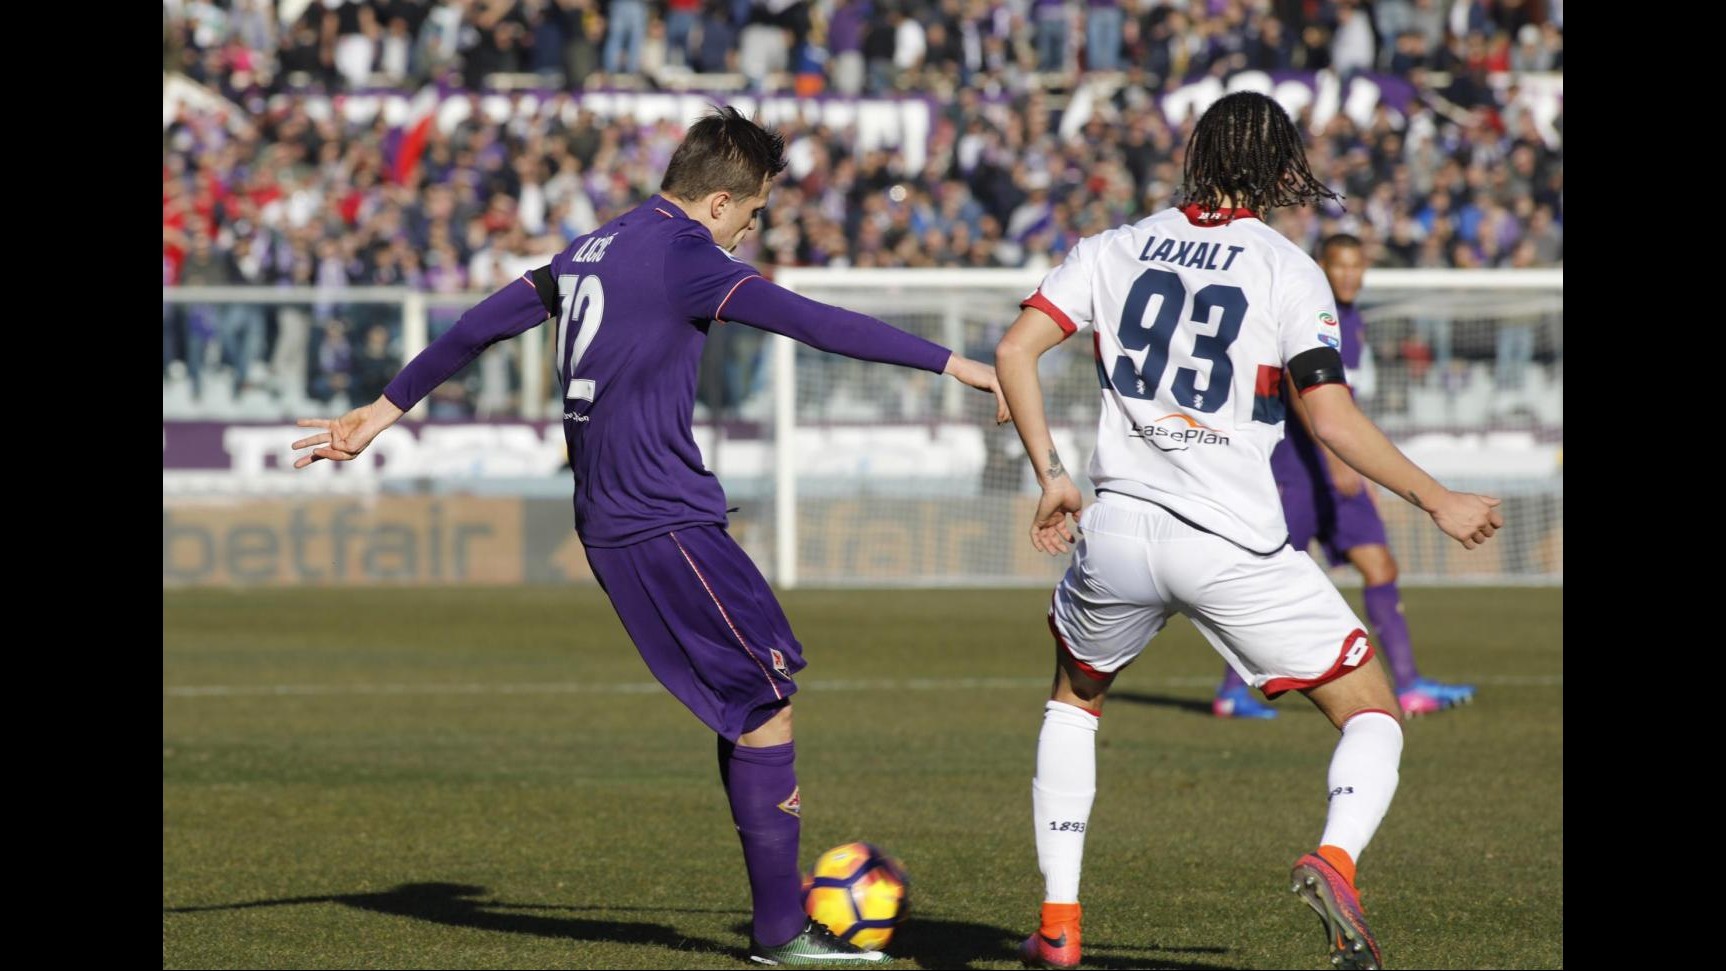 FOTO Fiorentina-Genoa 3-3